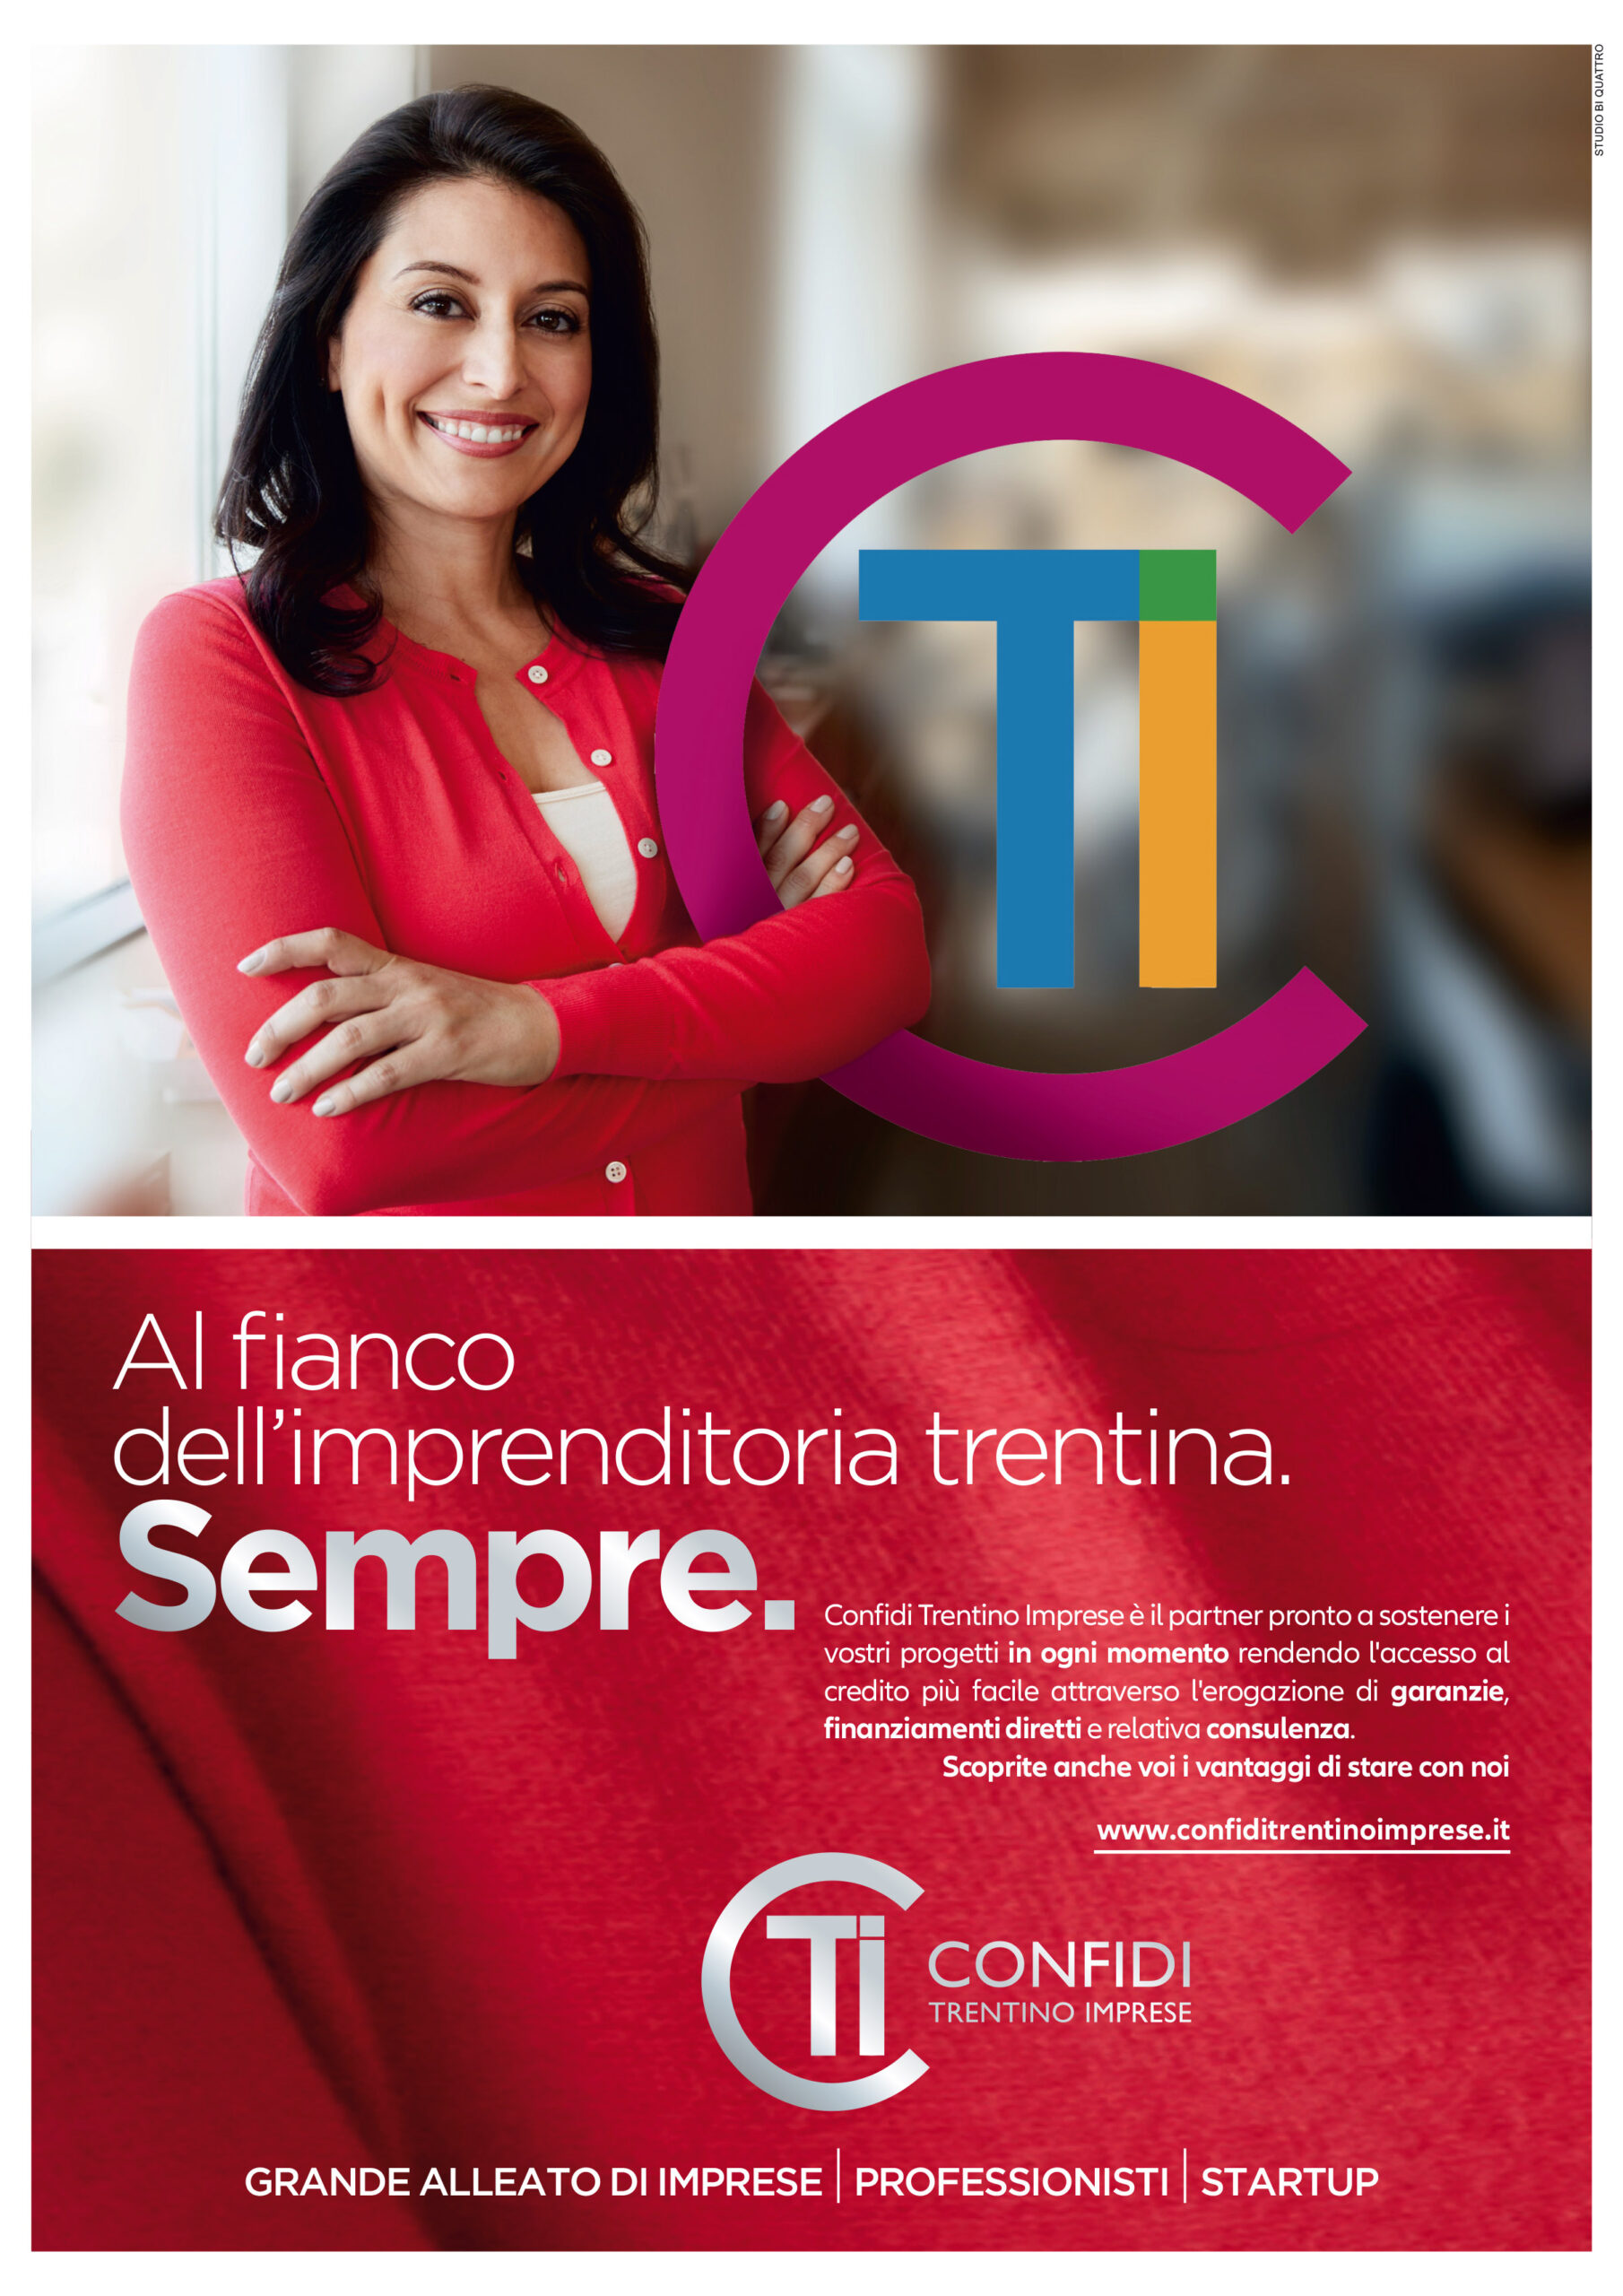 Confidi Trentino Imprese